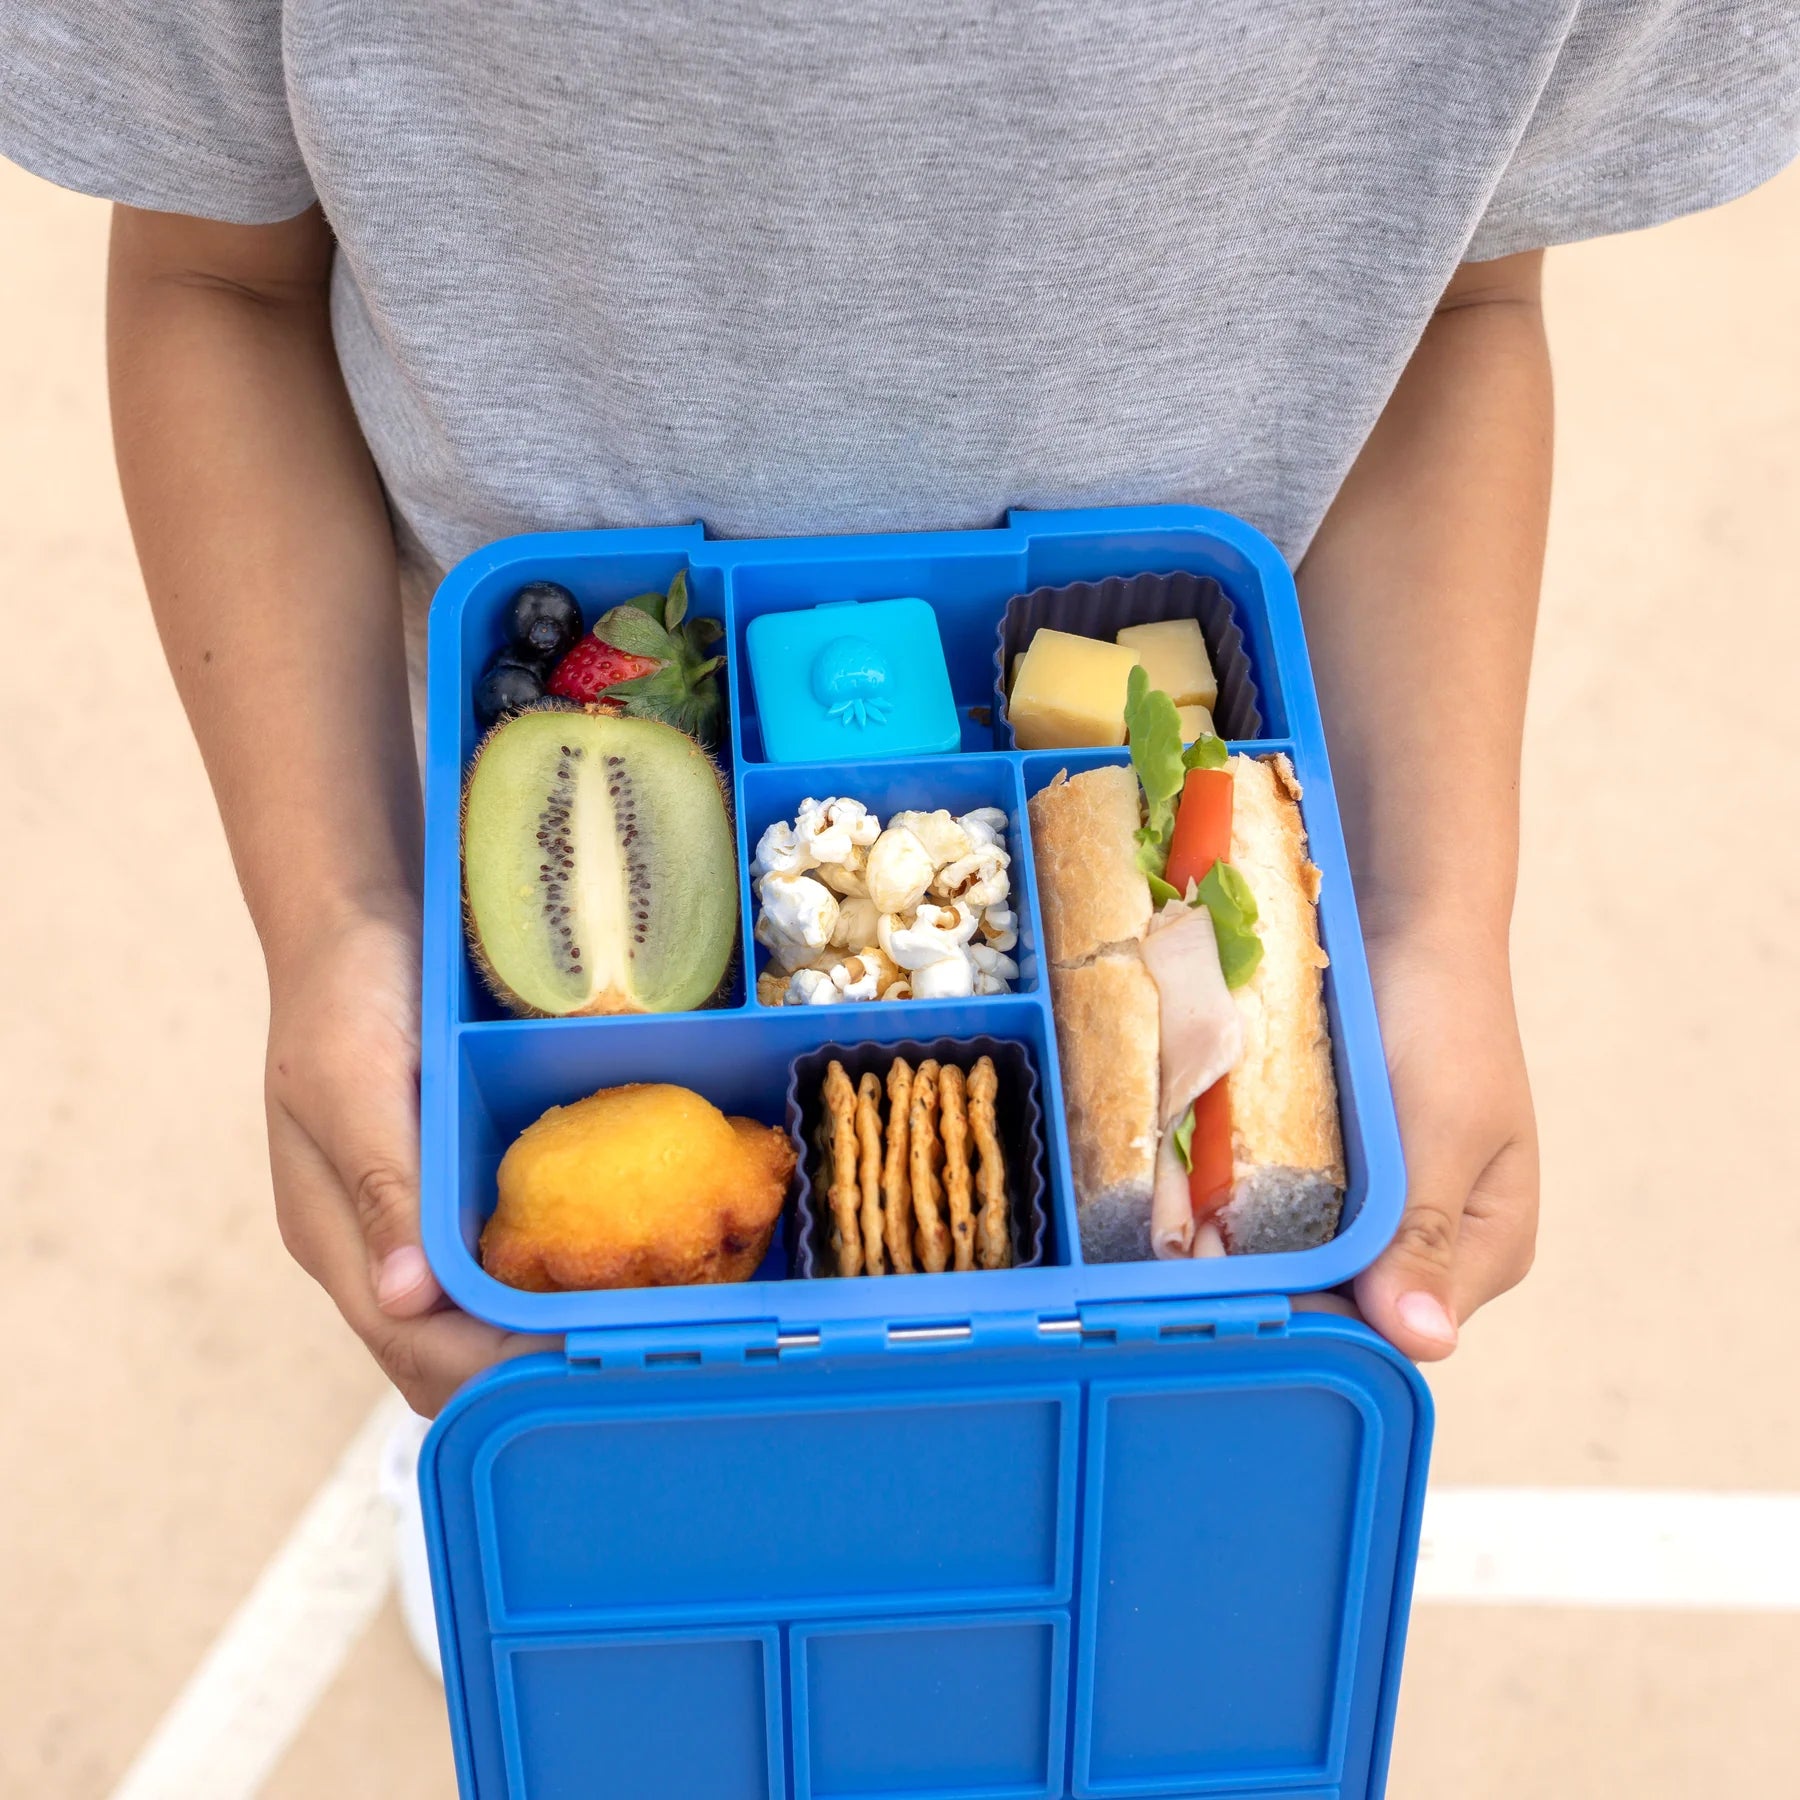 Bento Five - Little Lunch Box Co - Borůvka (ozdob si podle sebe)